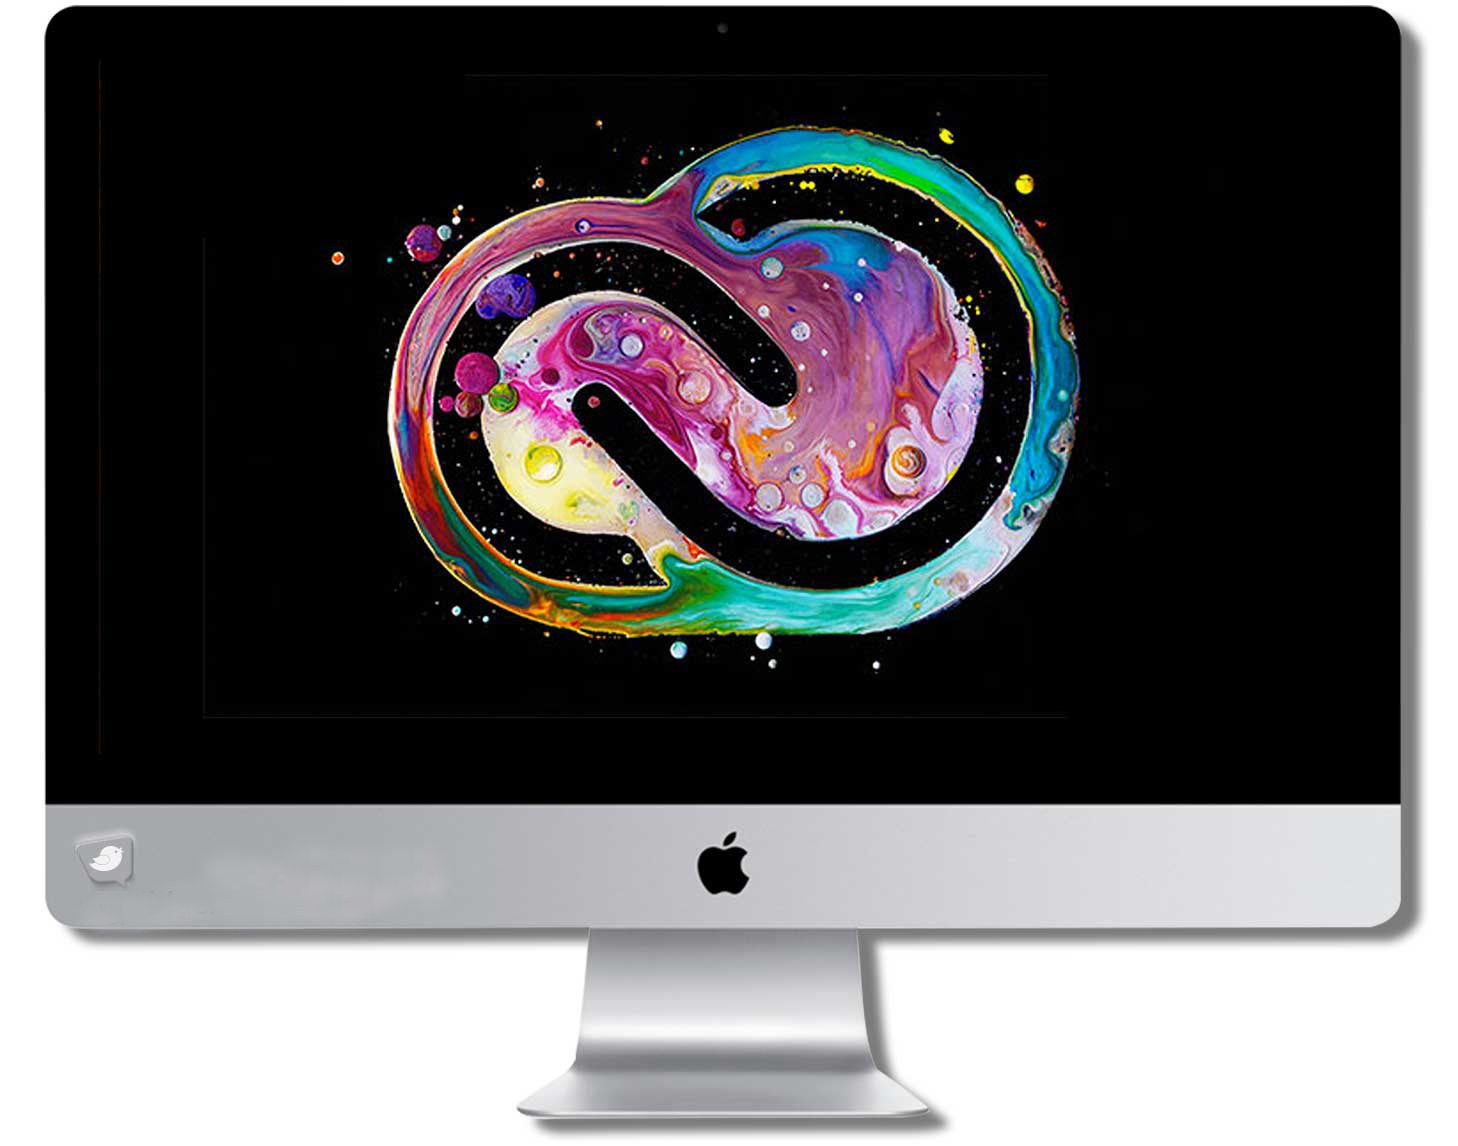 Idd880.com Adobe Zii 4.0.1 Cc 2018 Universal Patcher For Mac